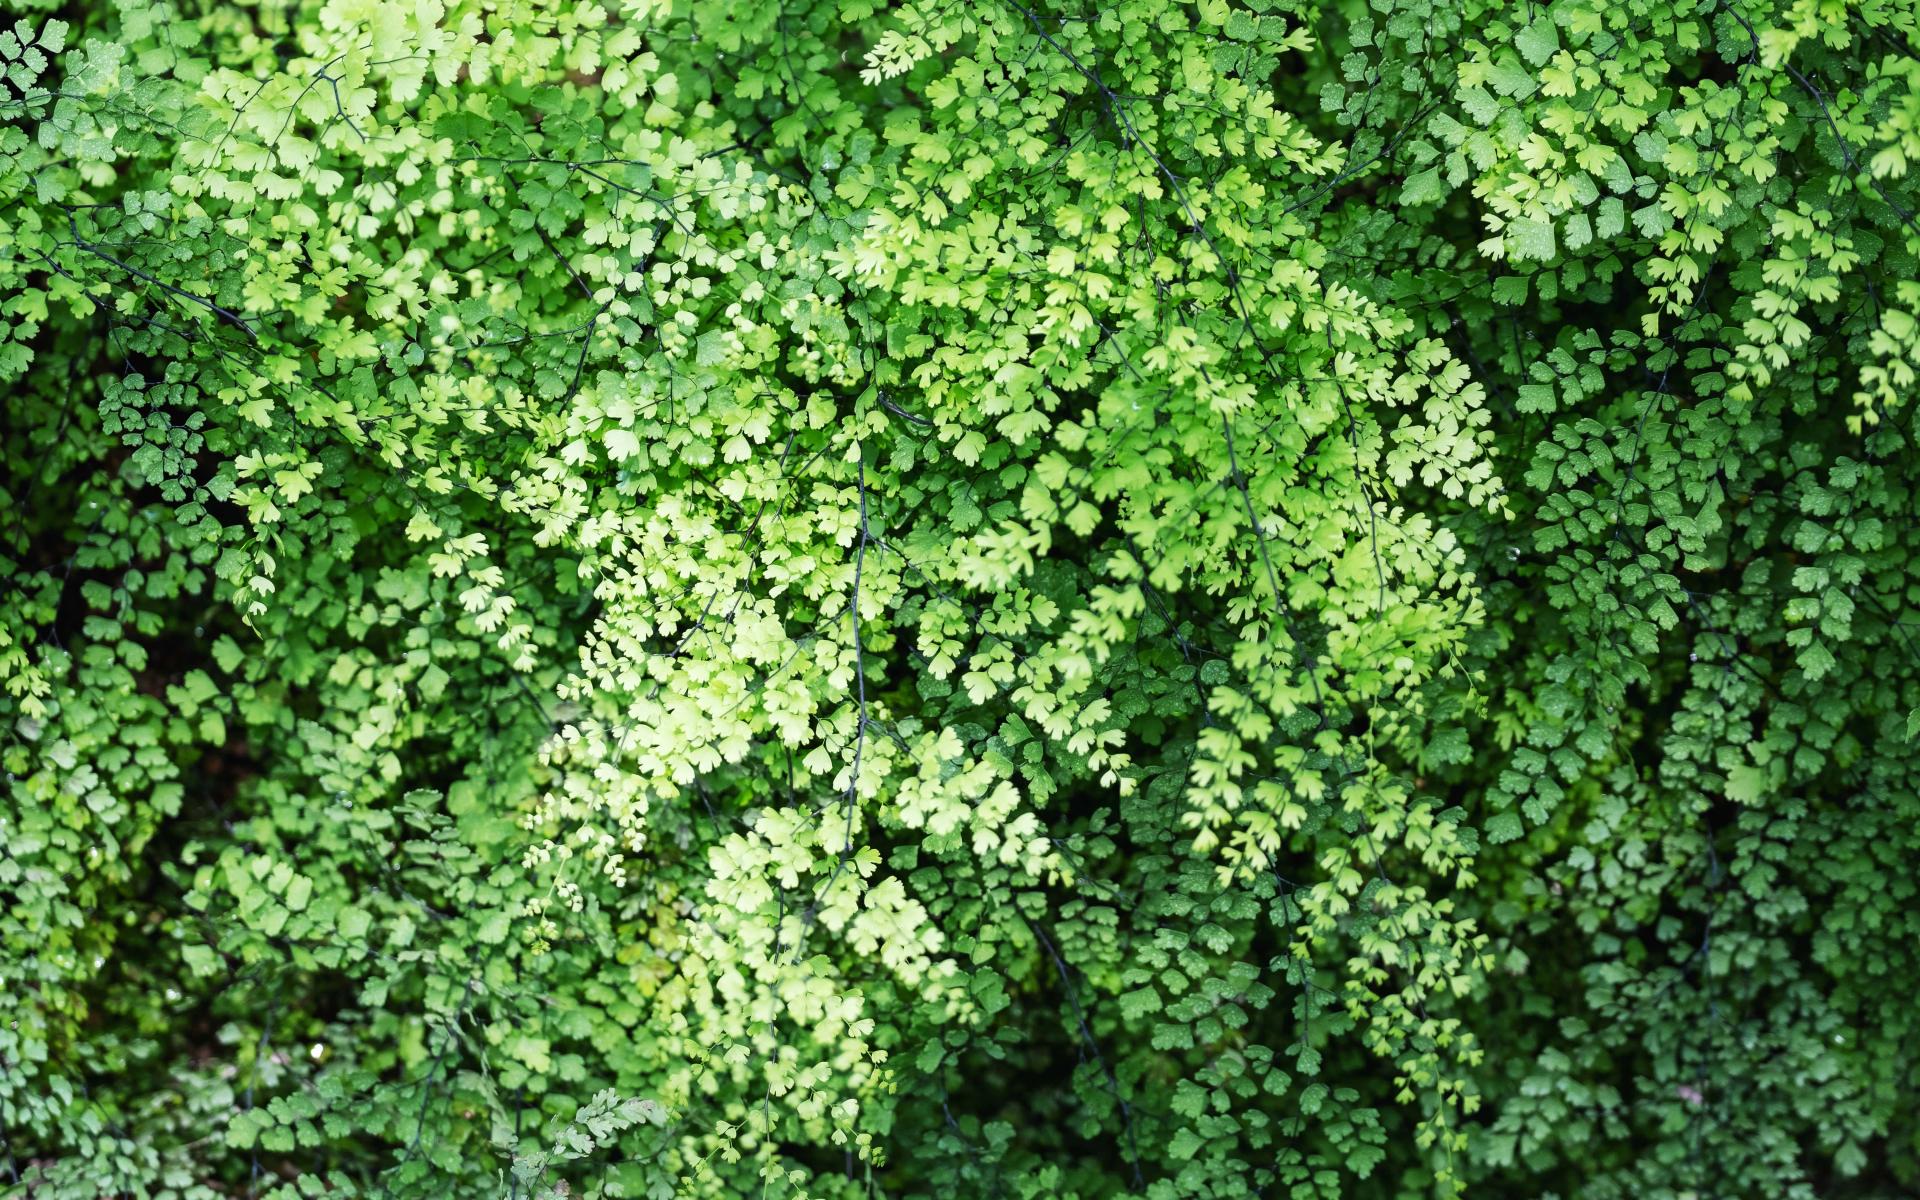 closeup-image-of-brittle-maidenhair-fern-or-adiant-2021-10-21-03-29-35-utc (1)-min.jpg